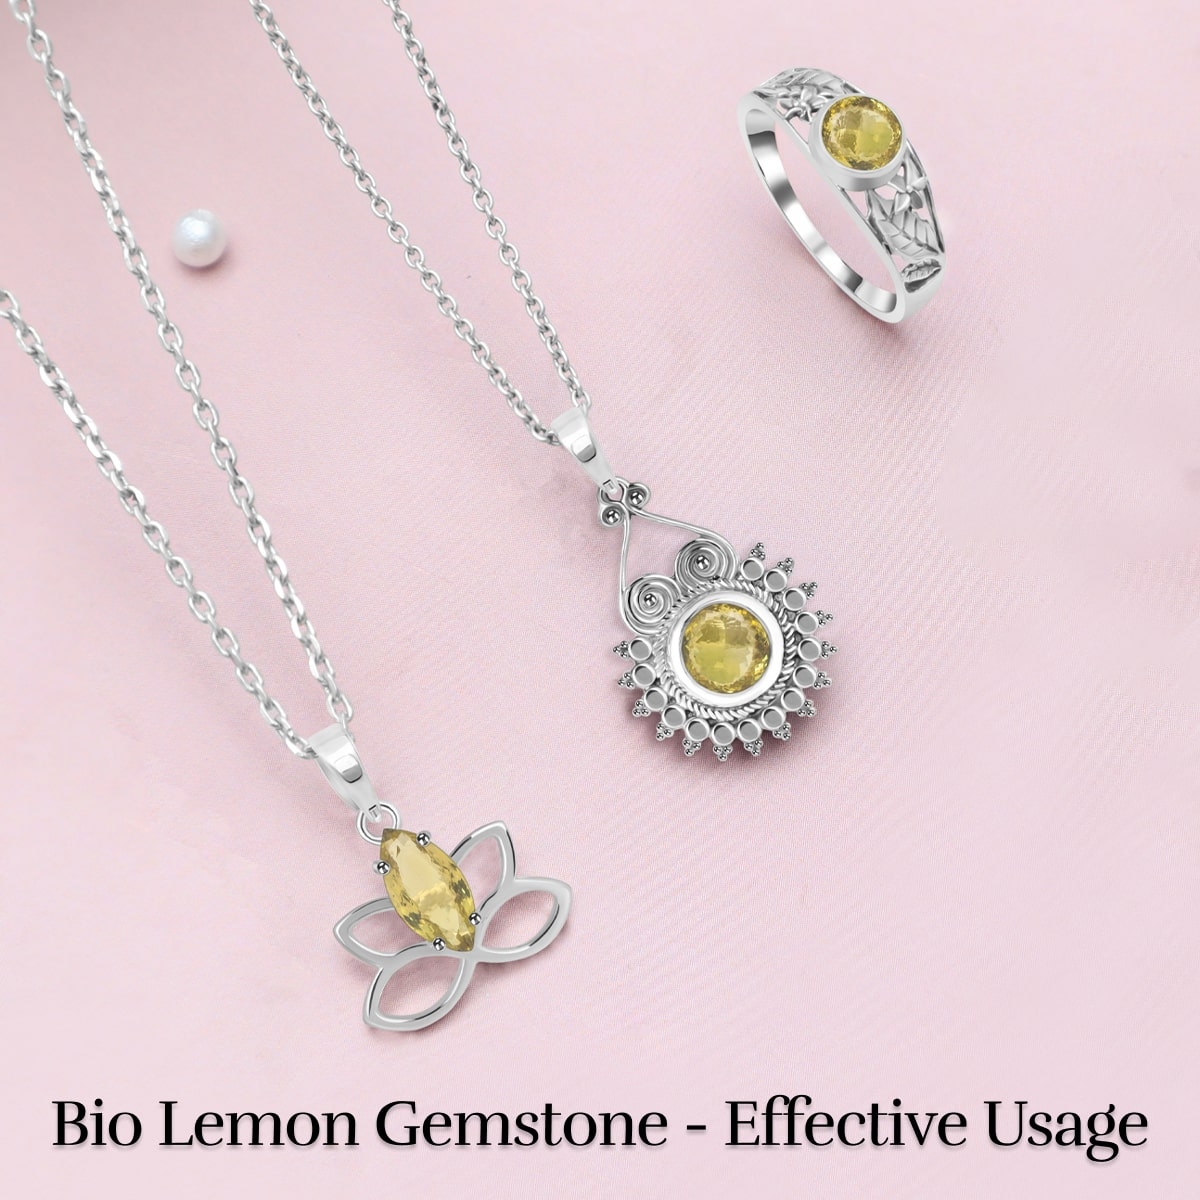 How to Use Bio Lemon Gemstone